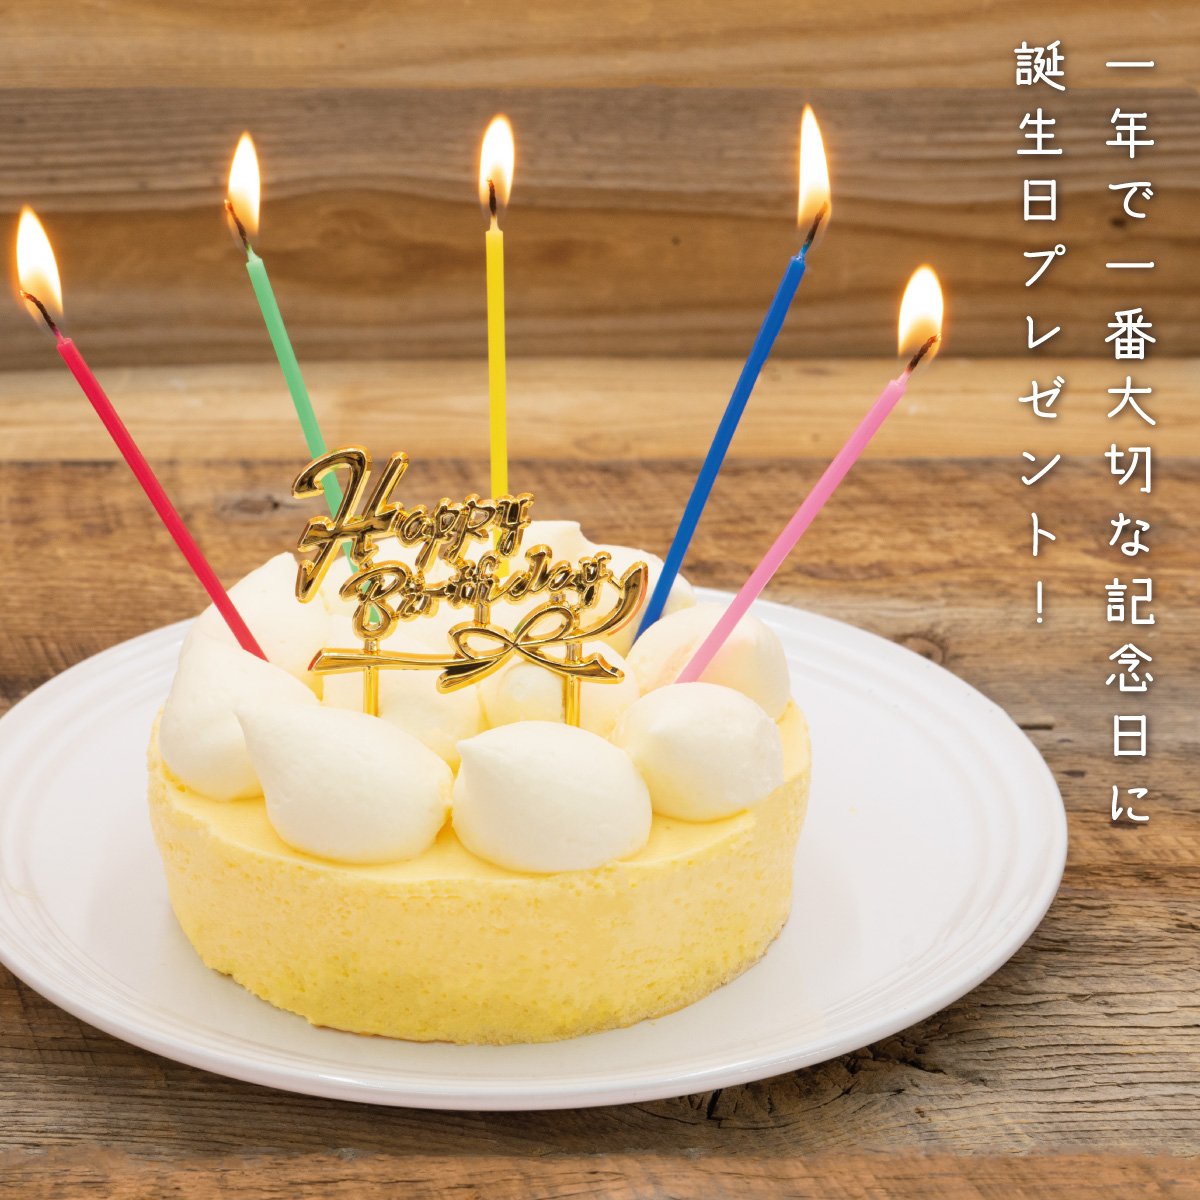 52 Off 誕生日ケーキ Happy Birthday くま文字 生クリーム 5号サイズ 4 6名分 バースデーケーキ 宅配 プレゼント フォチェッタ